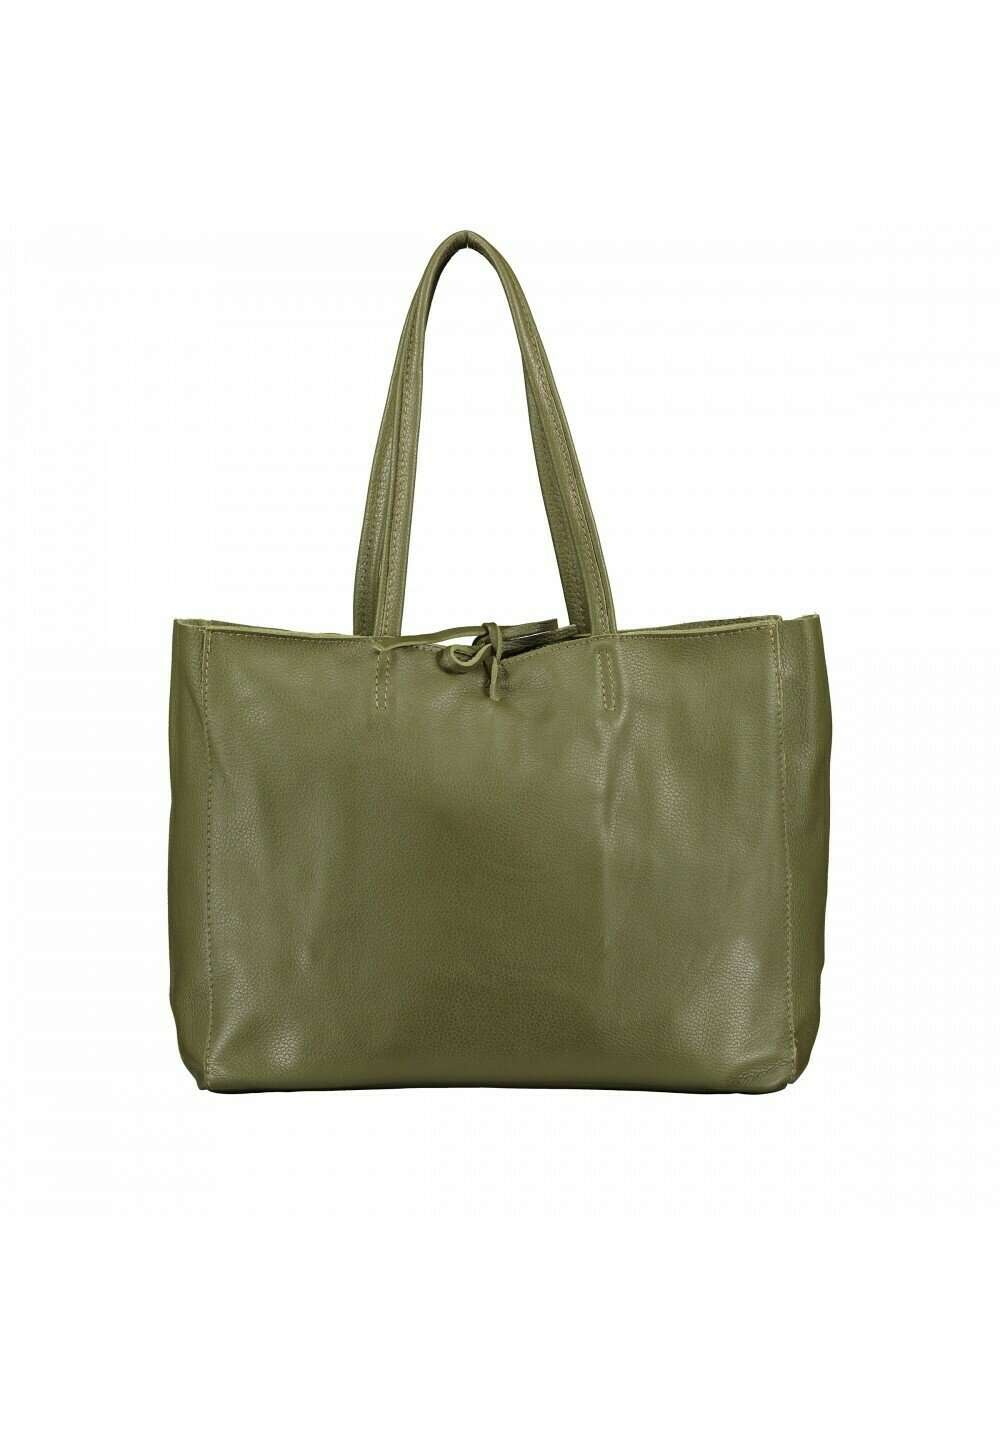 SHOPPER - Shopping Bag SHOPPER